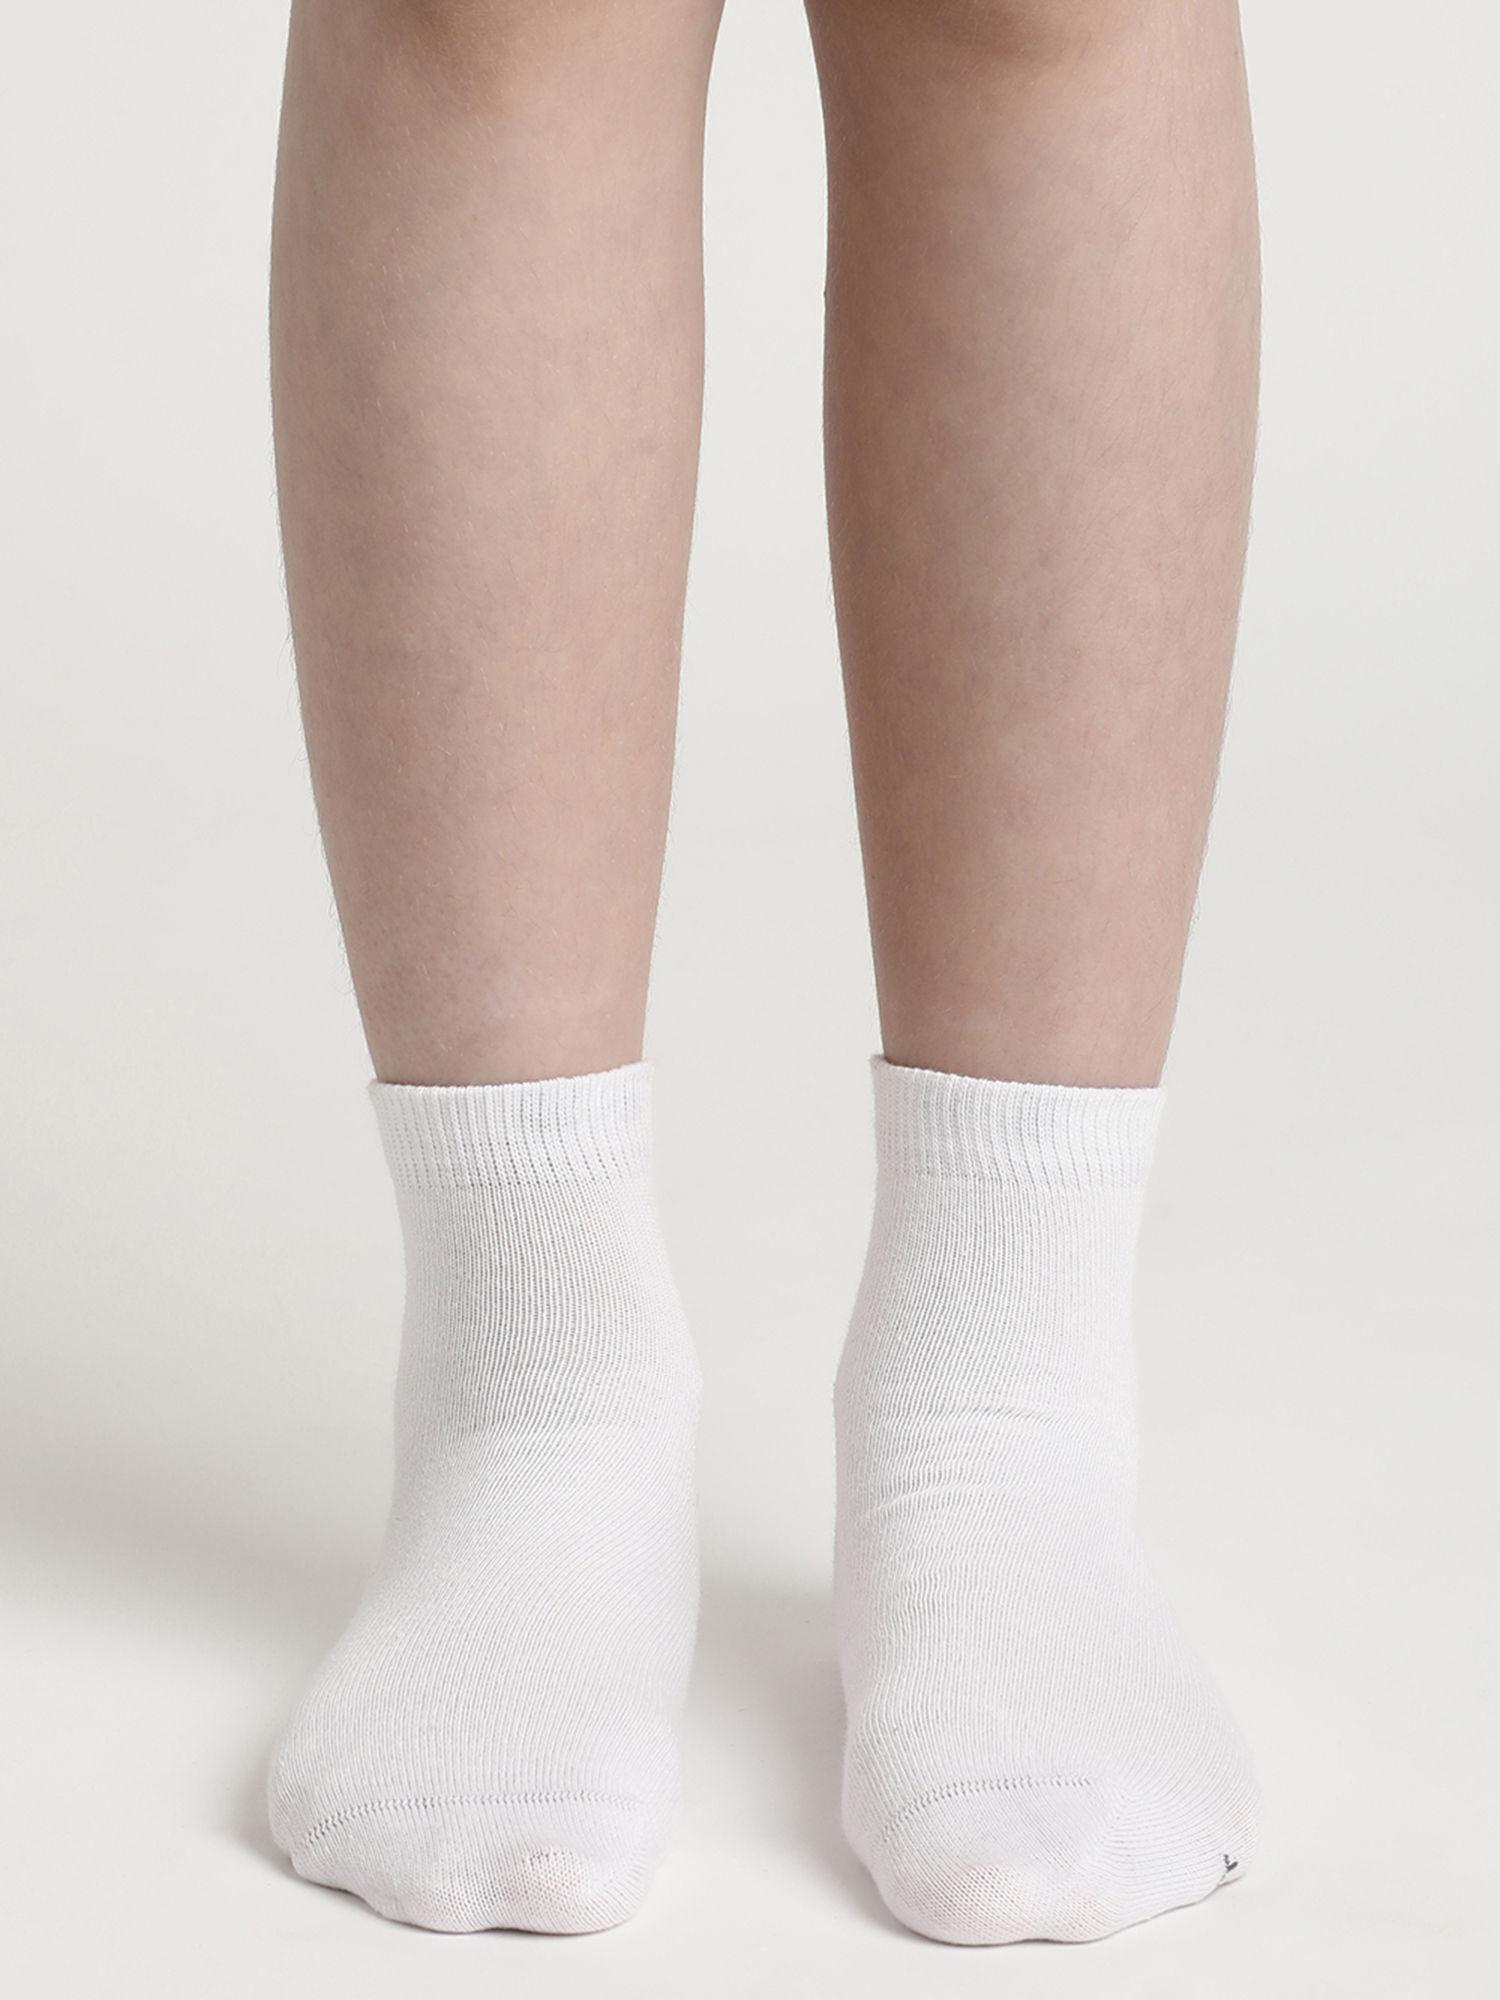 7801 Unisex Cotton Nylon Stretch Ankle Length Socks - White